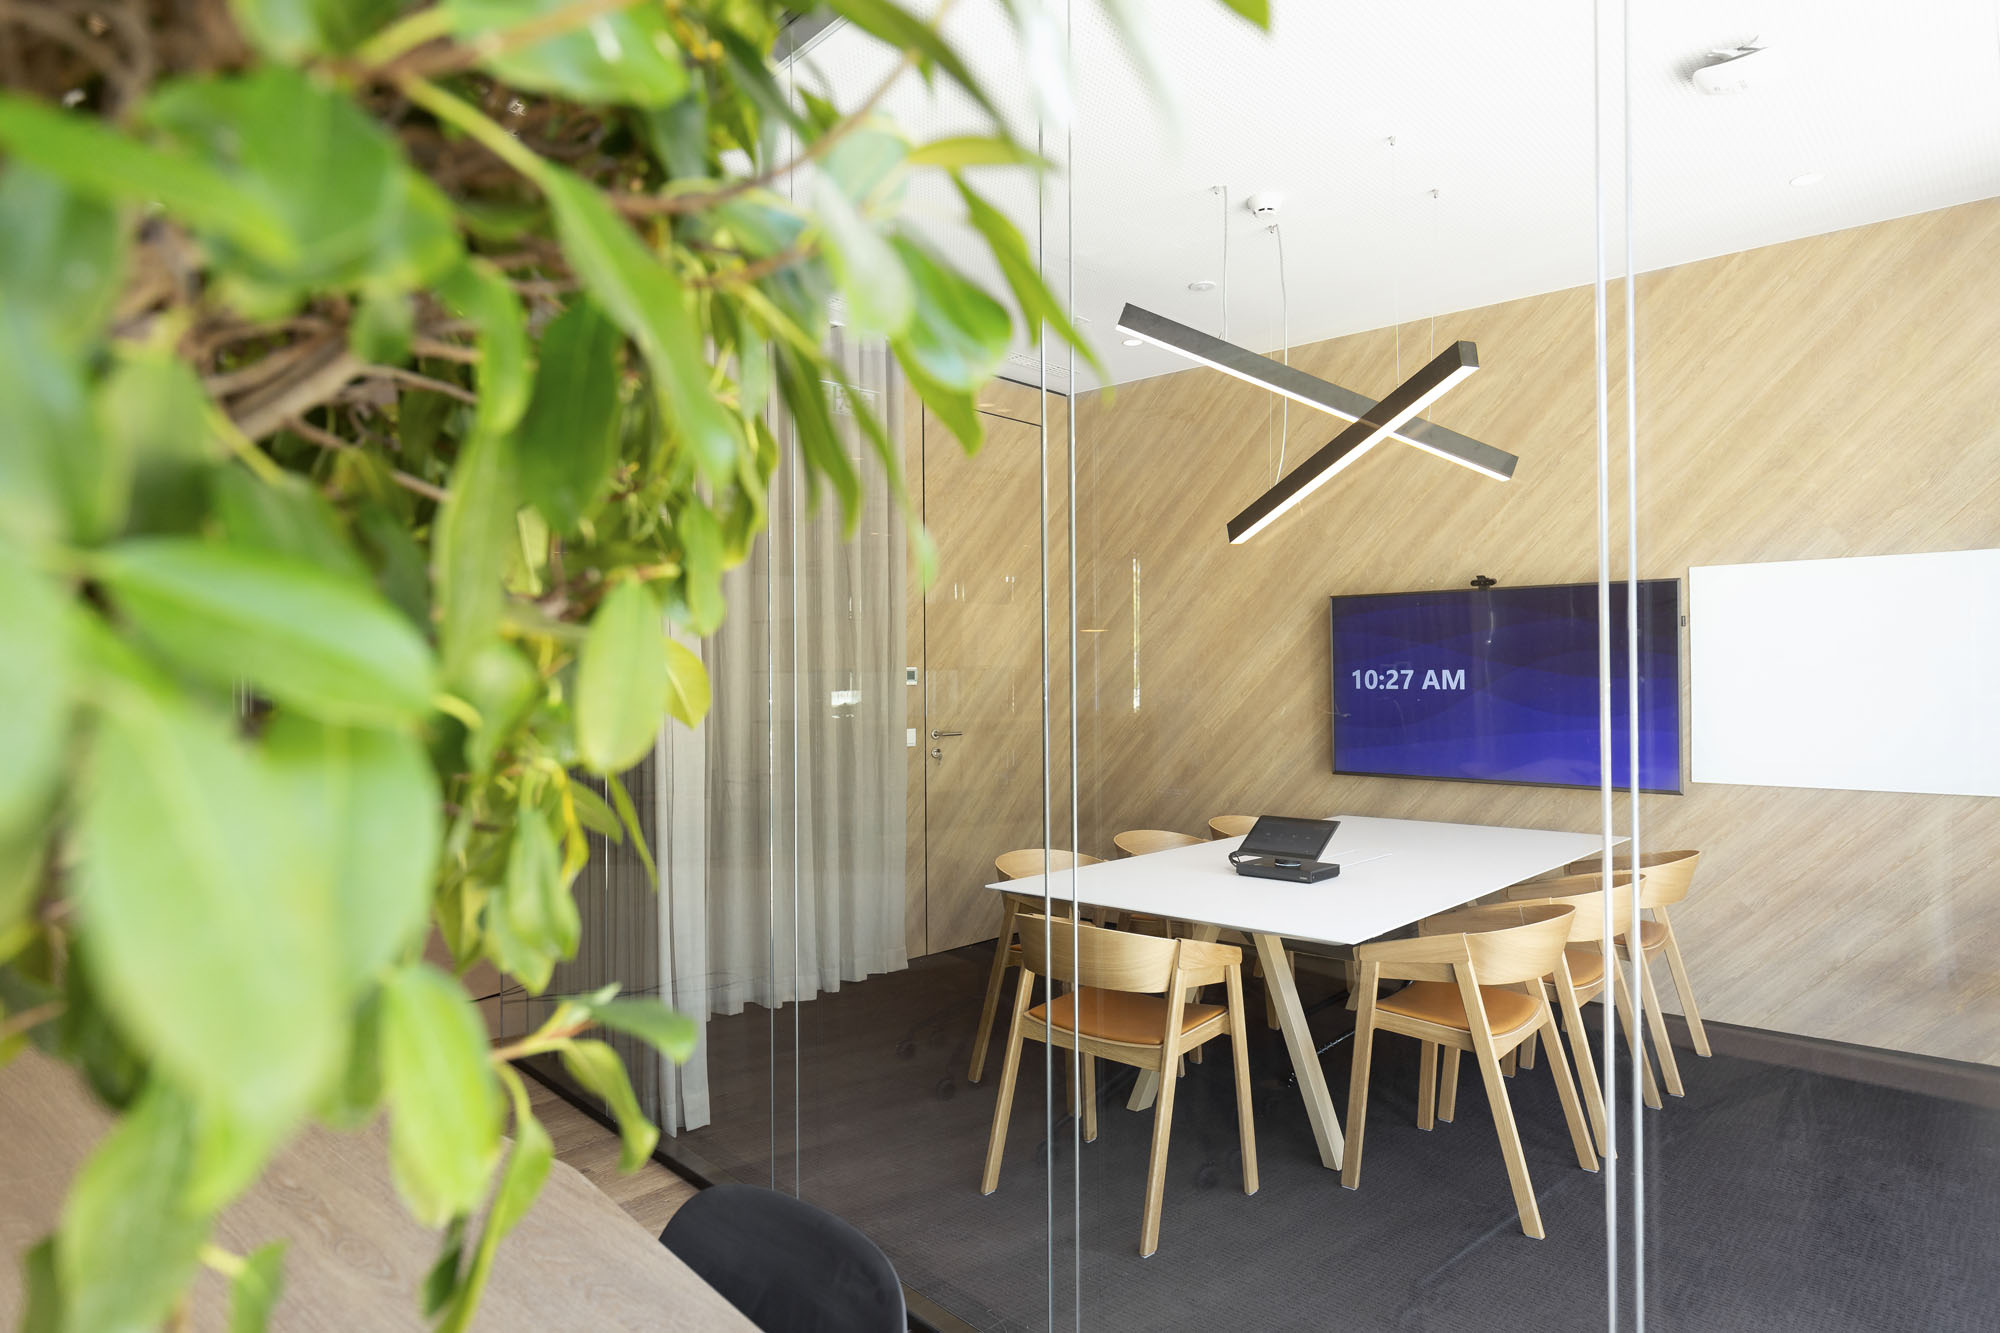 Microsoft(マイクロソフト)のオフィス - ポルトガル, リスボンの会議室/ミーティングスペース